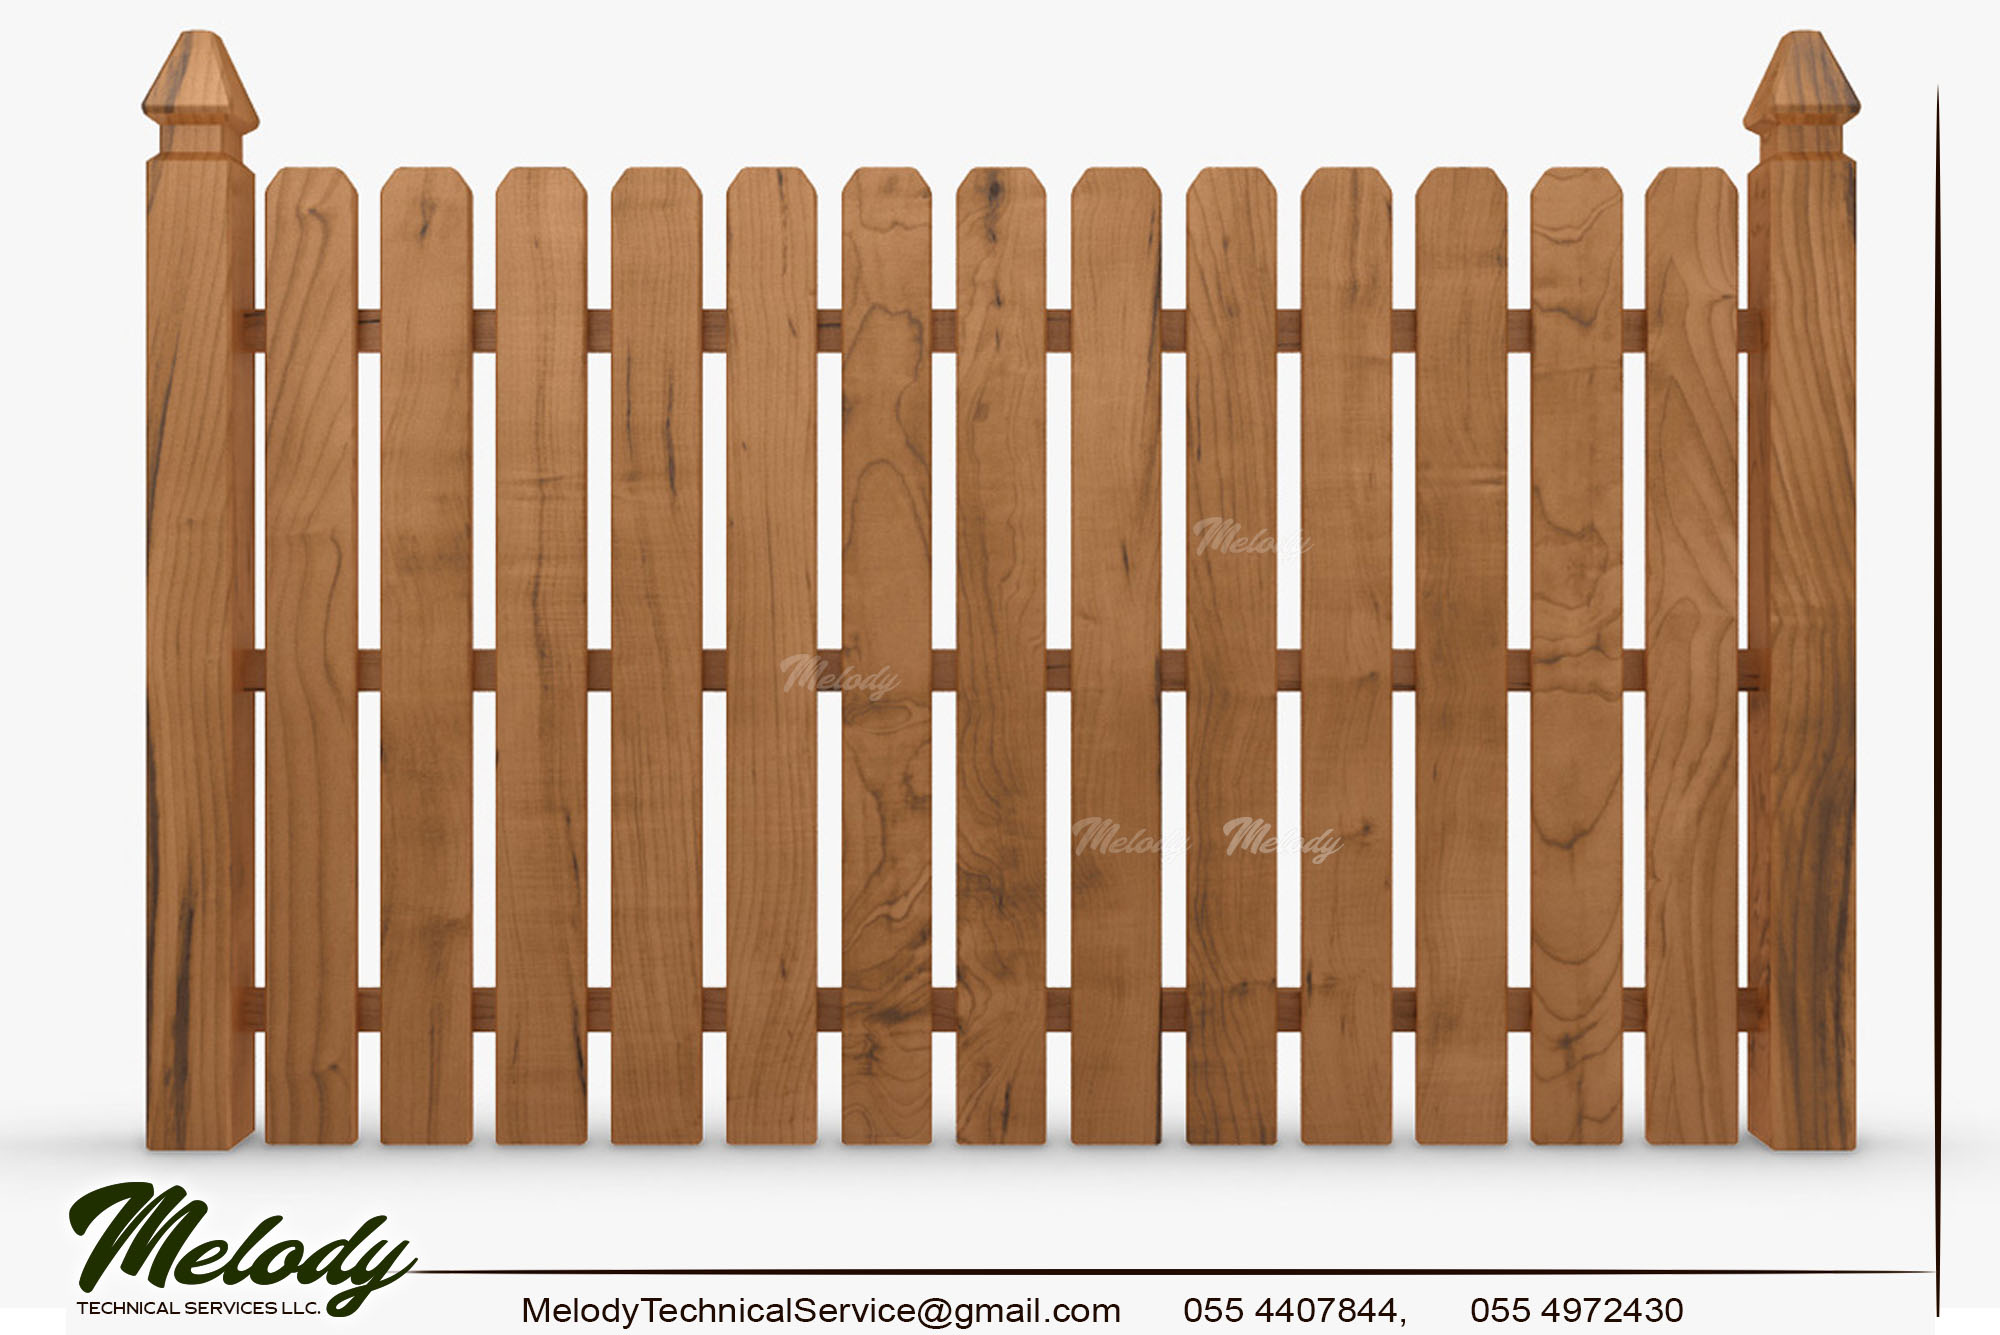 Wooden Fence Suppliers in Dubai | Garden & Kids Privacy